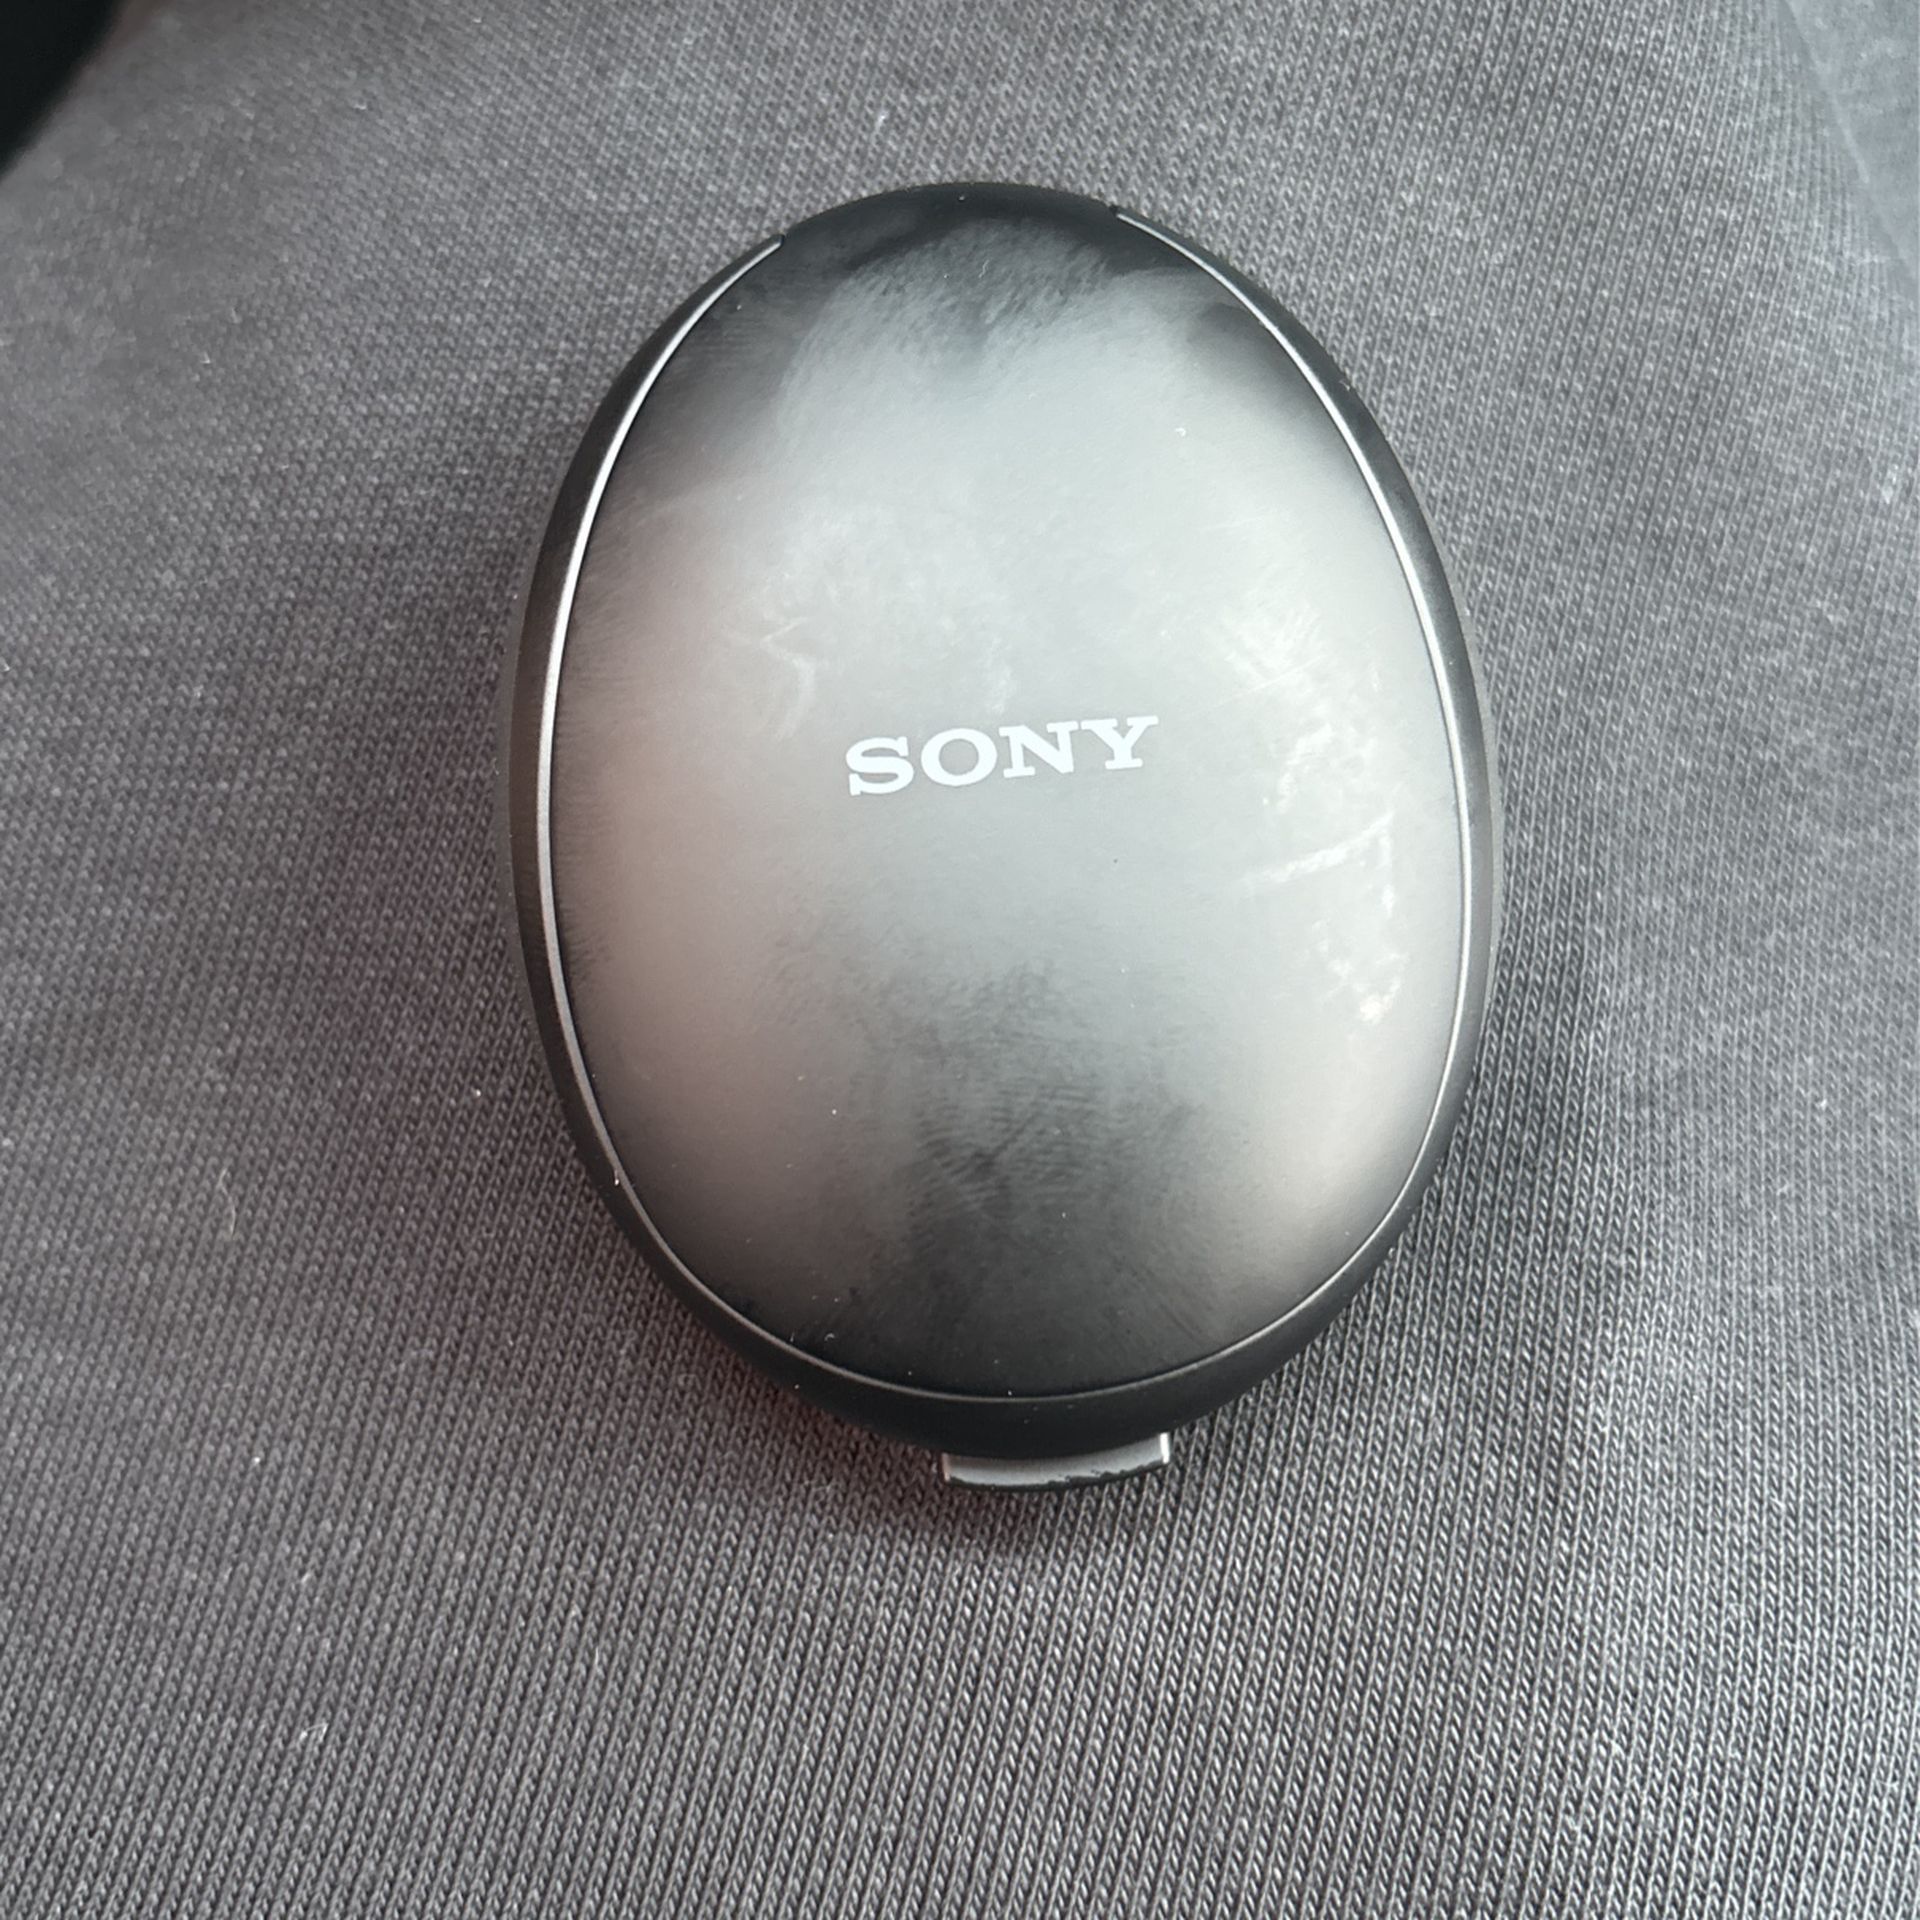 Sony Hearing Aid